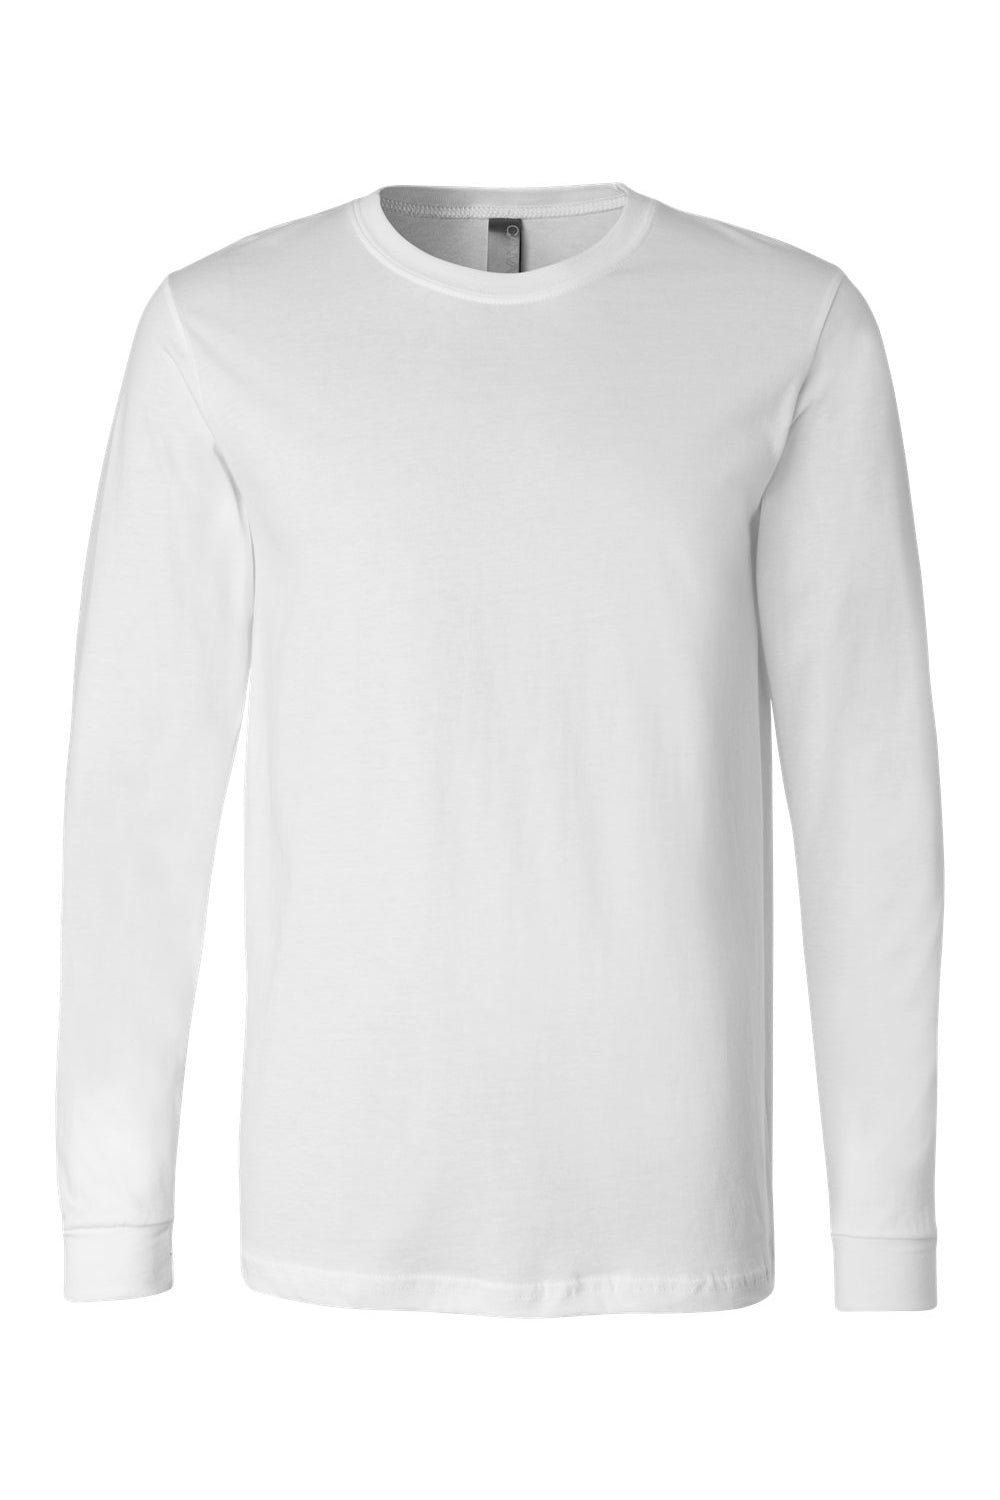 Bella + Canvas BC3501/3501 Mens Jersey Long Sleeve Crewneck T-Shirt White Flat Front